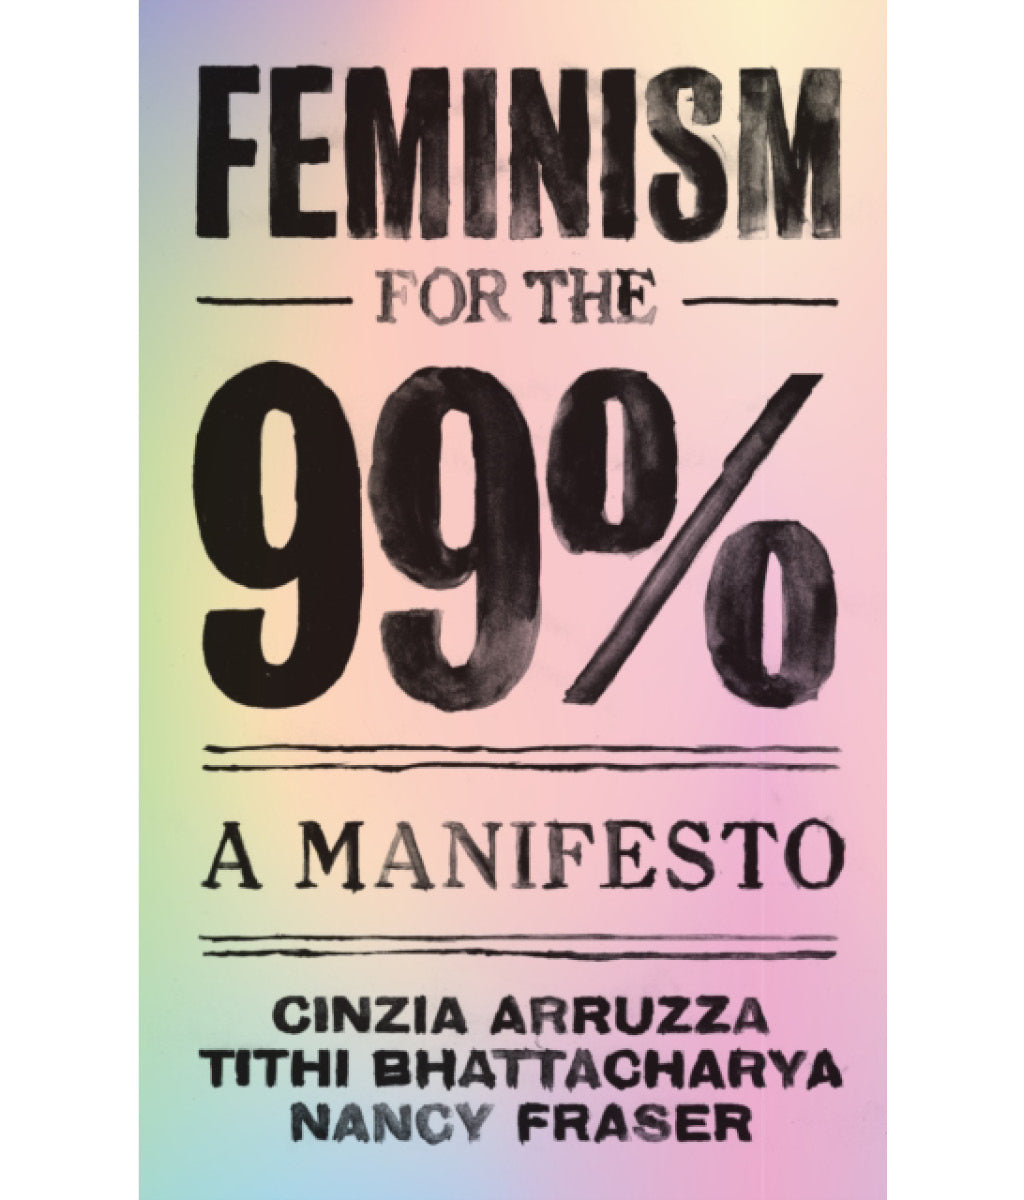 Feminism for the 99 by Cinzia Arruzza, Tithi Bhattacharya and Nancy Fraser